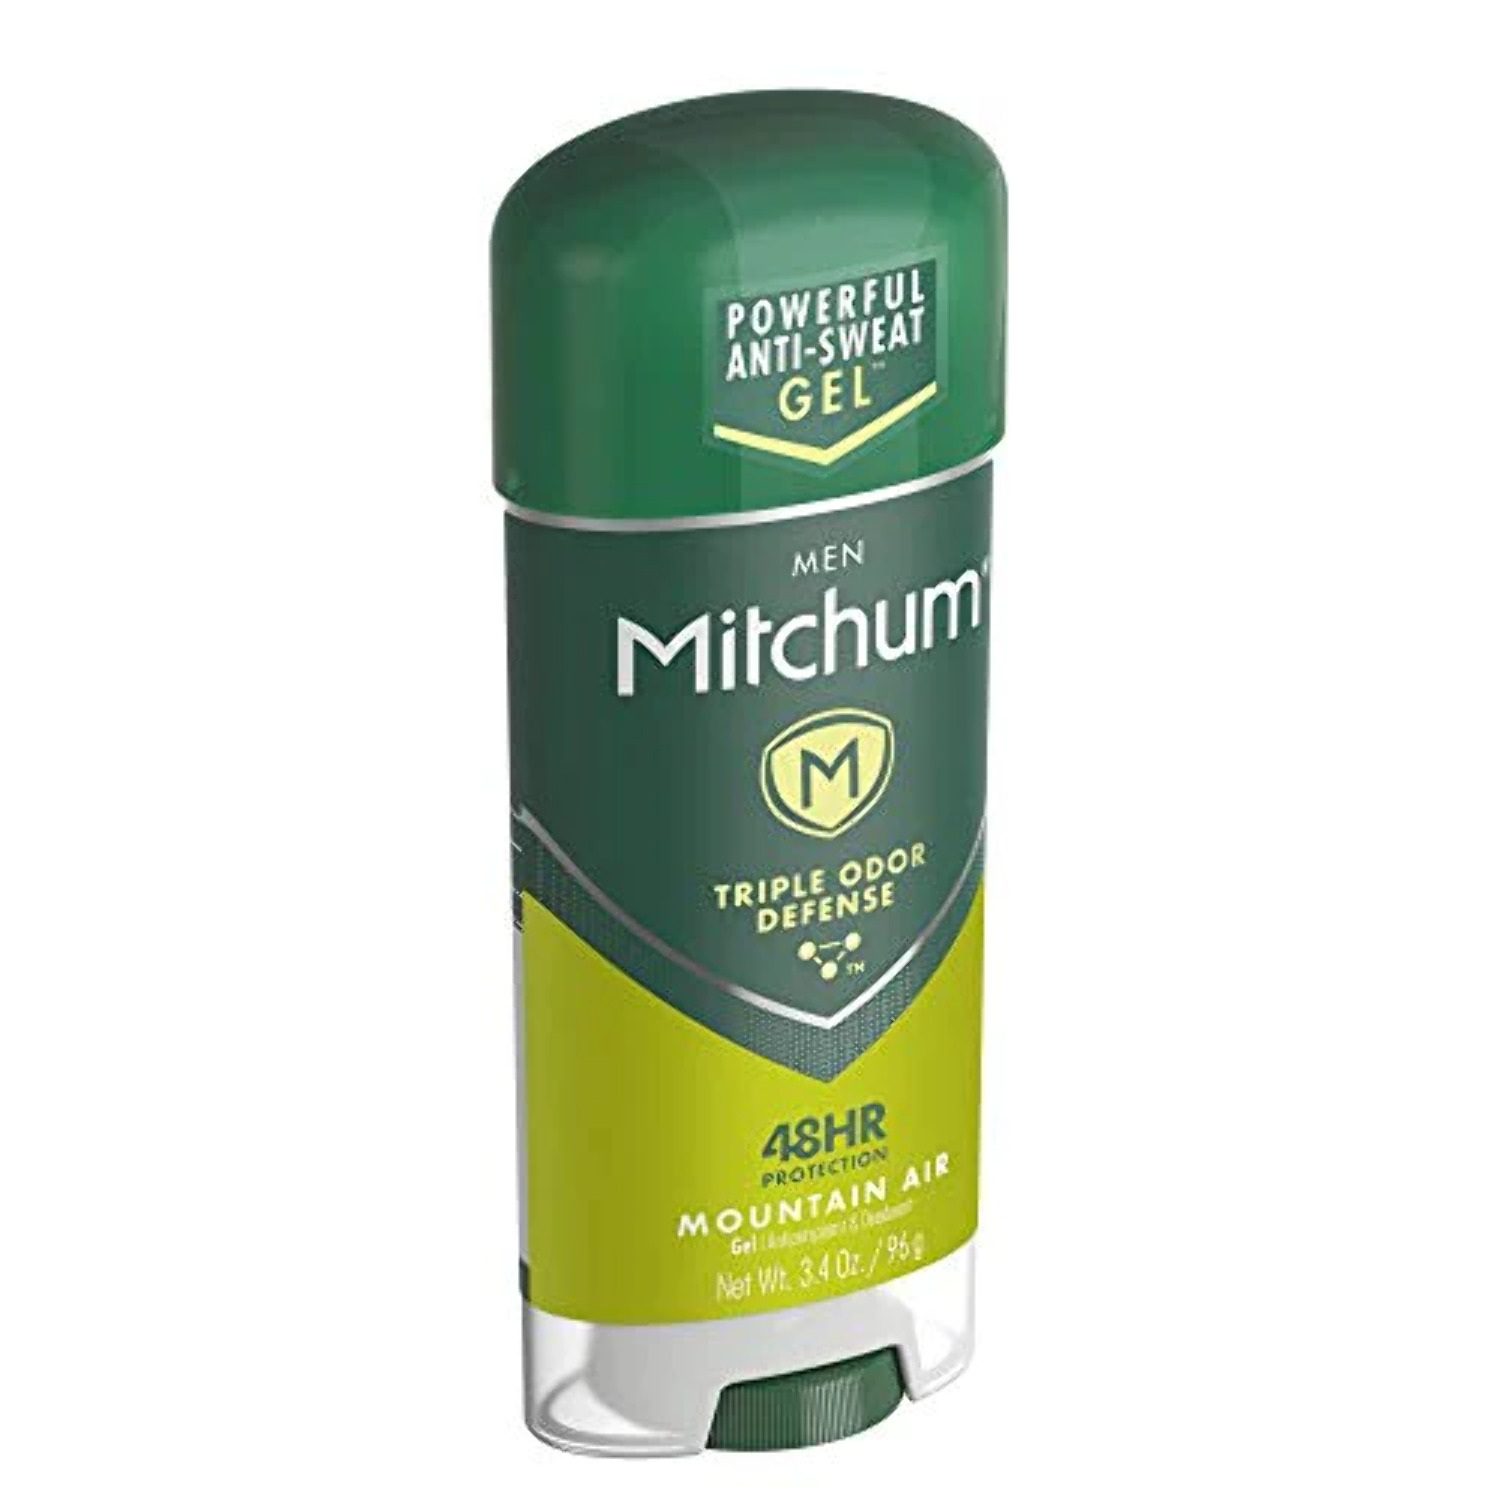 Mitchum Power Gel Antiperspirant & Deodorant, Mountain Air by Mitchum for Men - 3.4 oz Deodorant Stick - image 4 of 5